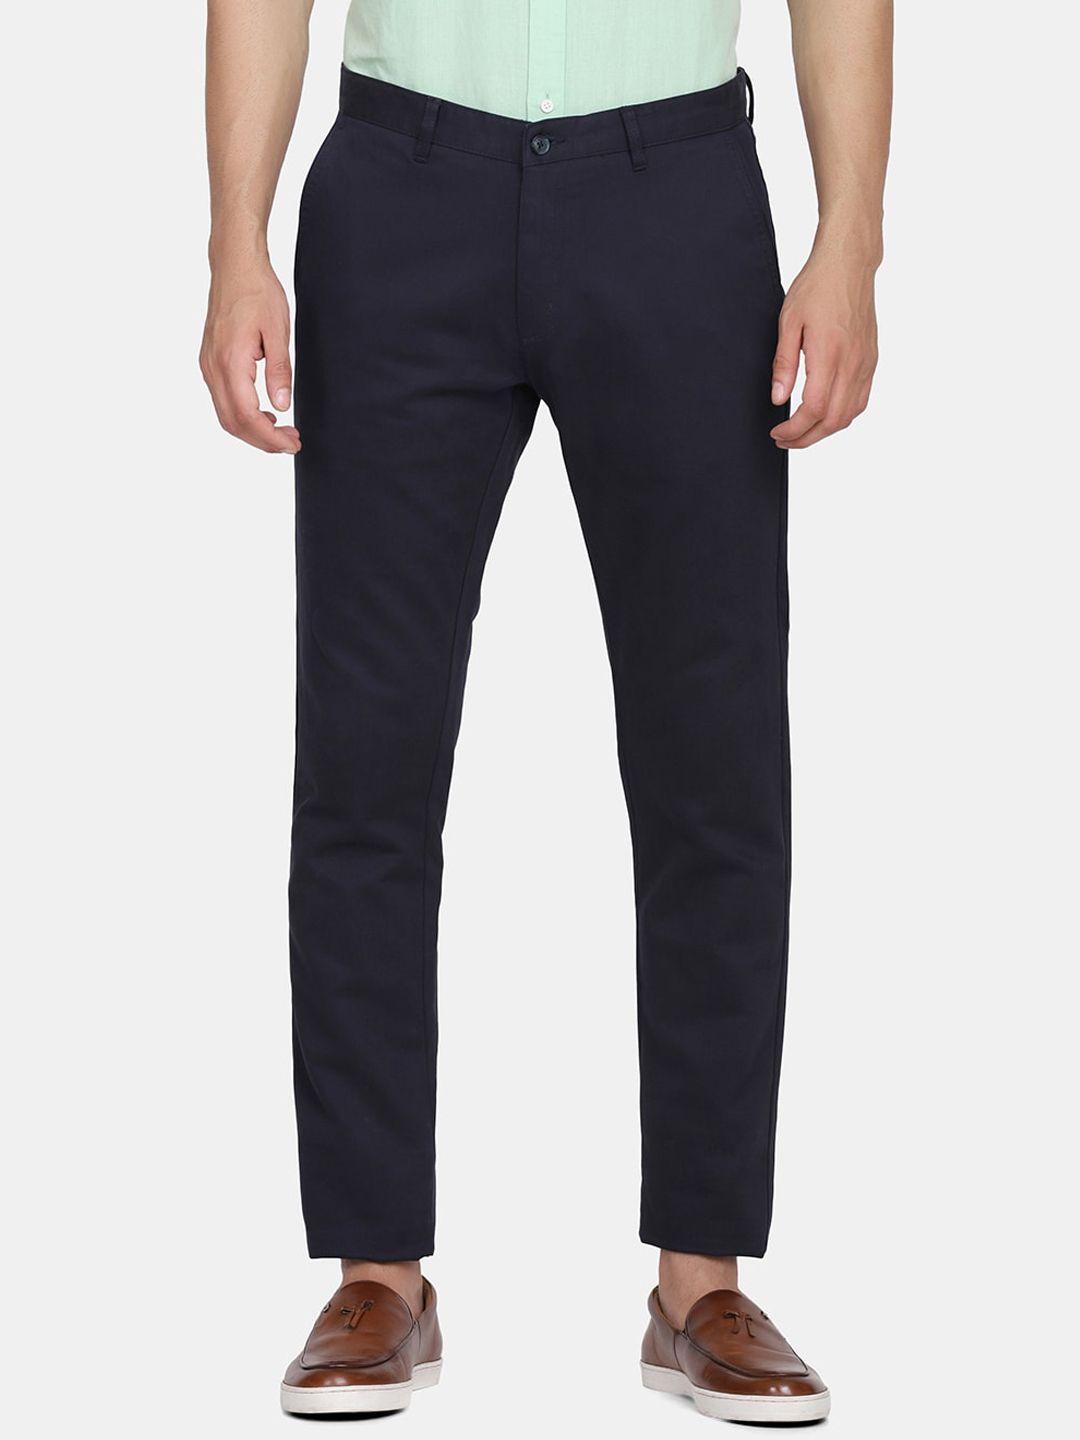 blackberrys-men-navy-blue-b-91-skinny-fit-cotton-chinos-trousers